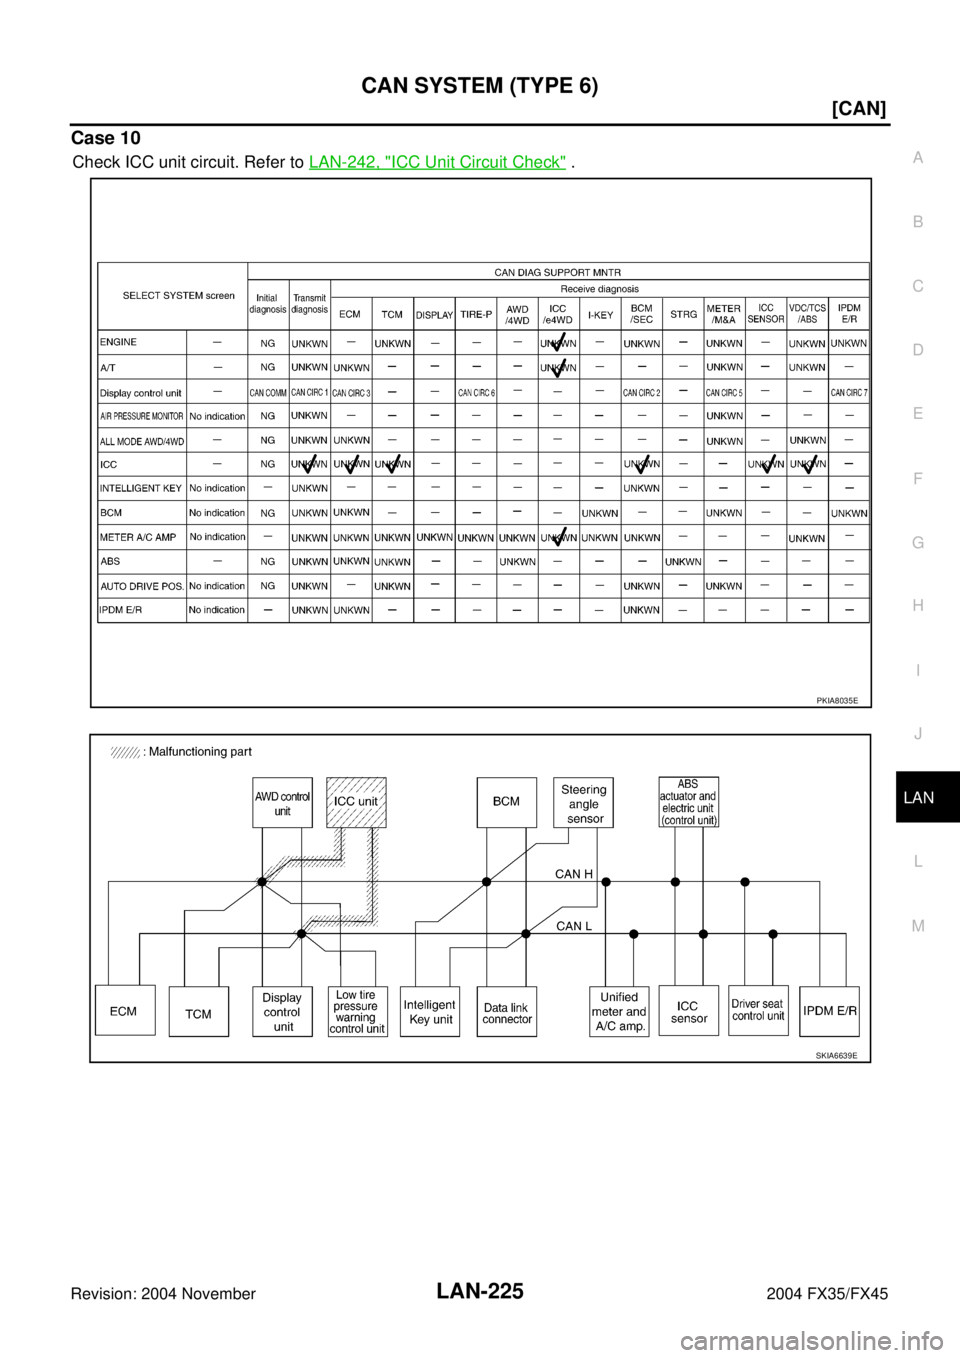 INFINITI FX35 2004  Service Manual CAN SYSTEM (TYPE 6)
LAN-225
[CAN]
C
D
E
F
G
H
I
J
L
MA
B
LAN
Revision: 2004 November 2004 FX35/FX45
Case 10
Check ICC unit circuit. Refer to LAN-242, "ICC Unit Circuit Check" .
PKIA8035E
SKIA6639E 